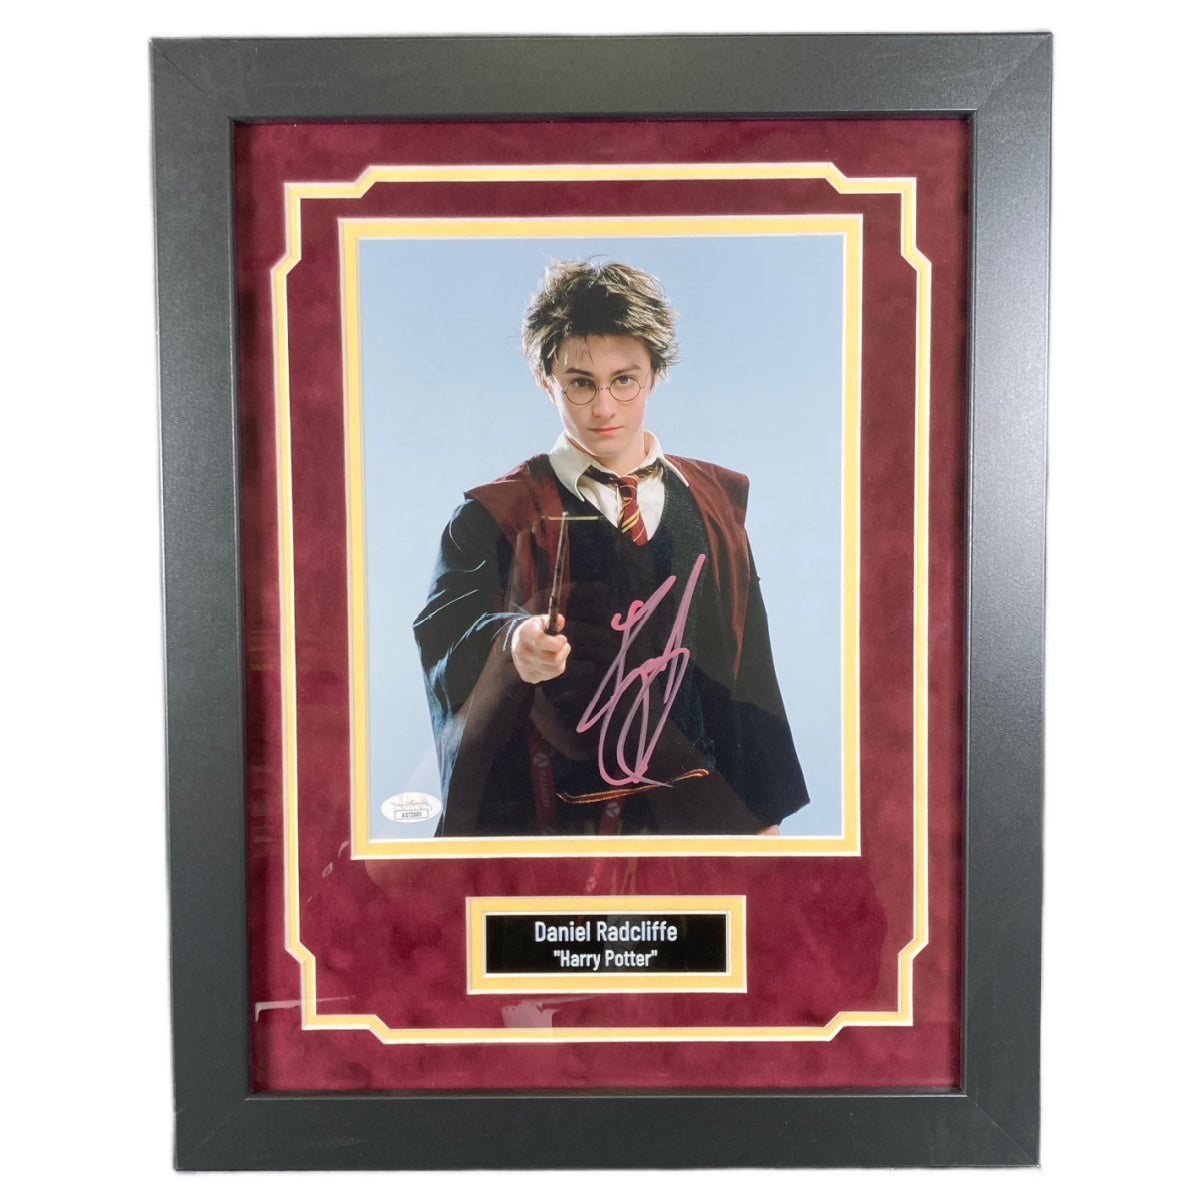 Daniel Radcliffe Signed 8x10 Photo Custom Framed Harry Potter Authentic Autographed JSA COA